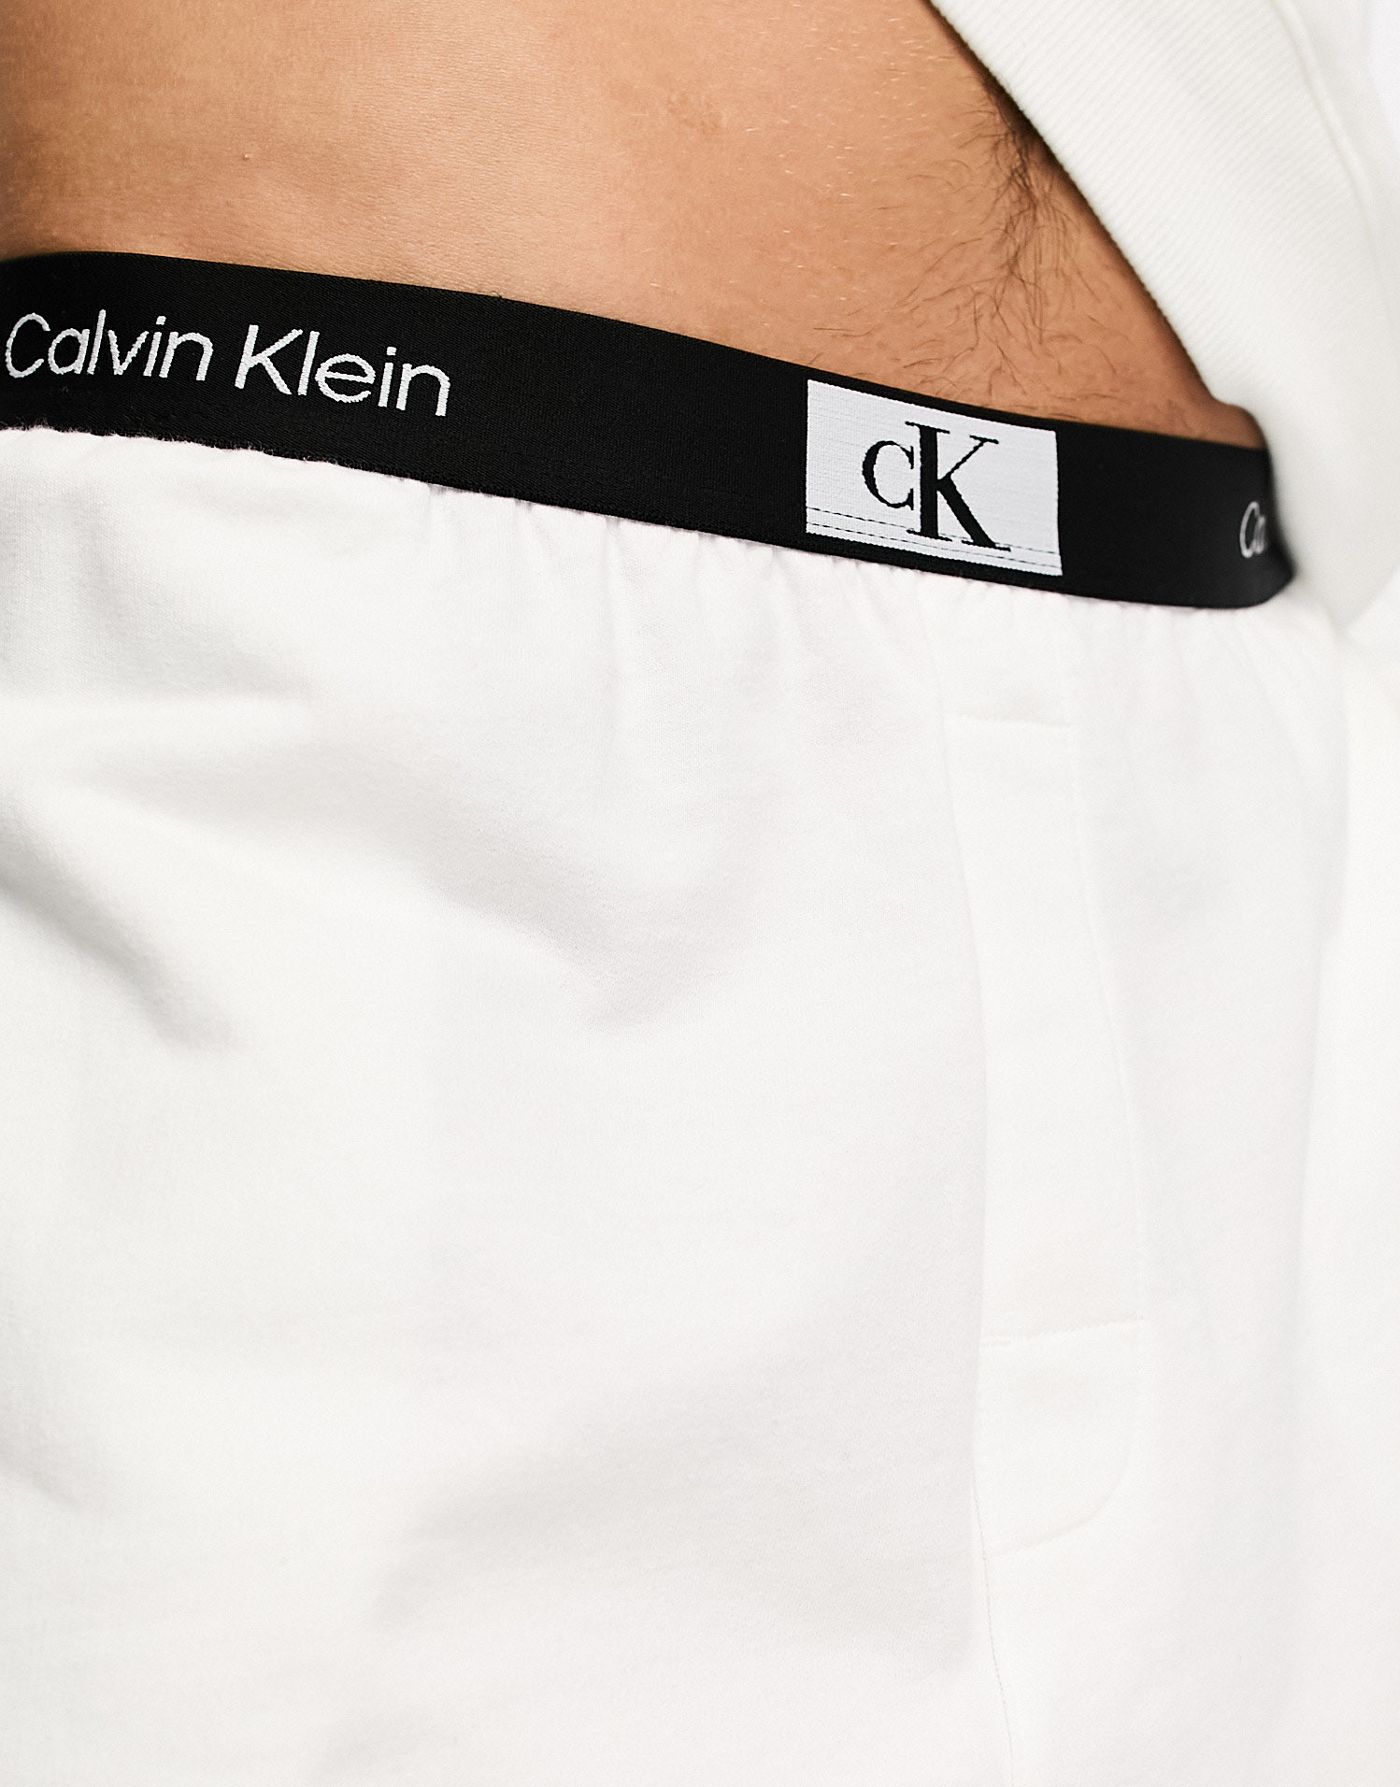 Calvin Klein CK 96 loungewear joggers in white